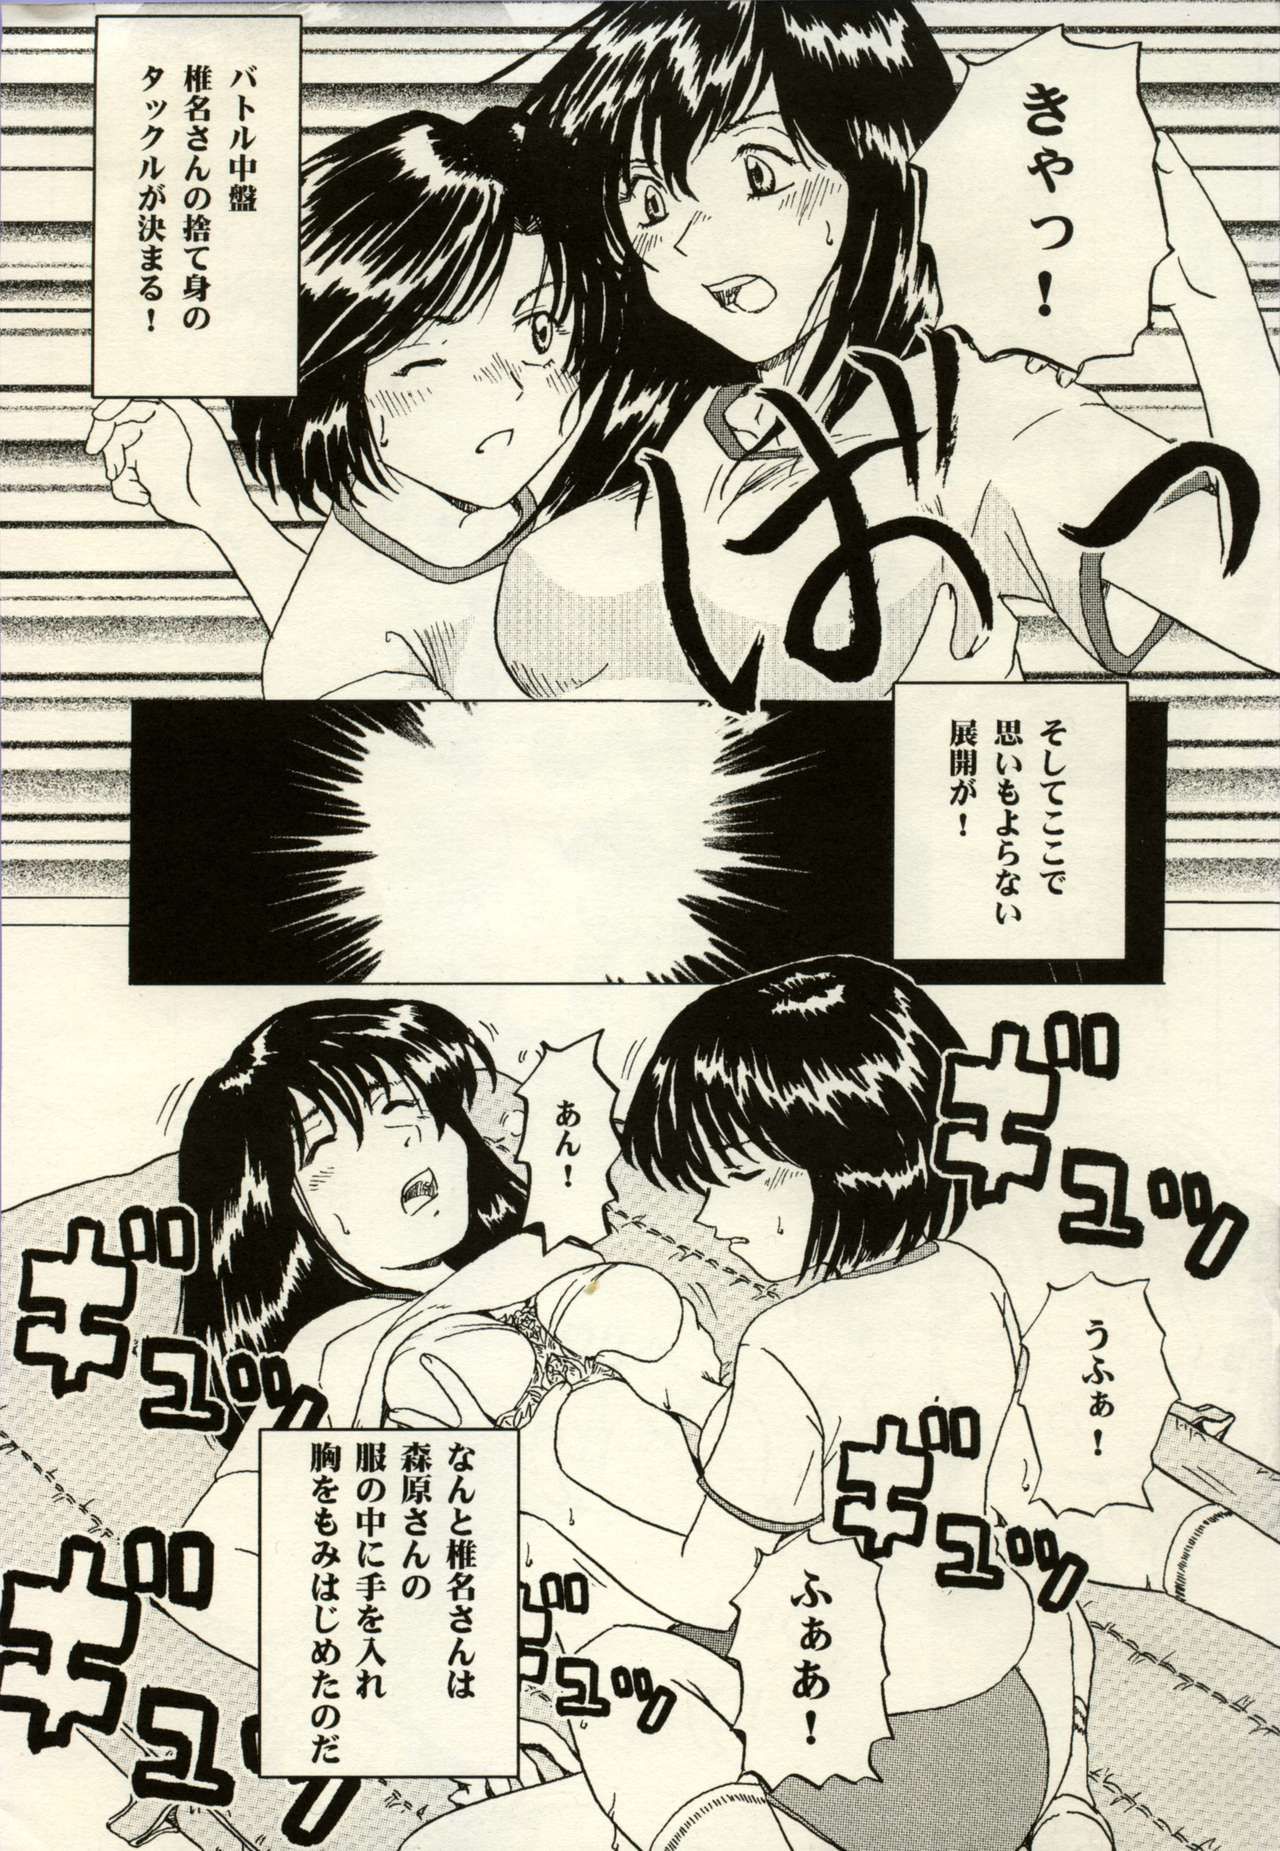 Manga Battle Volume 2 10